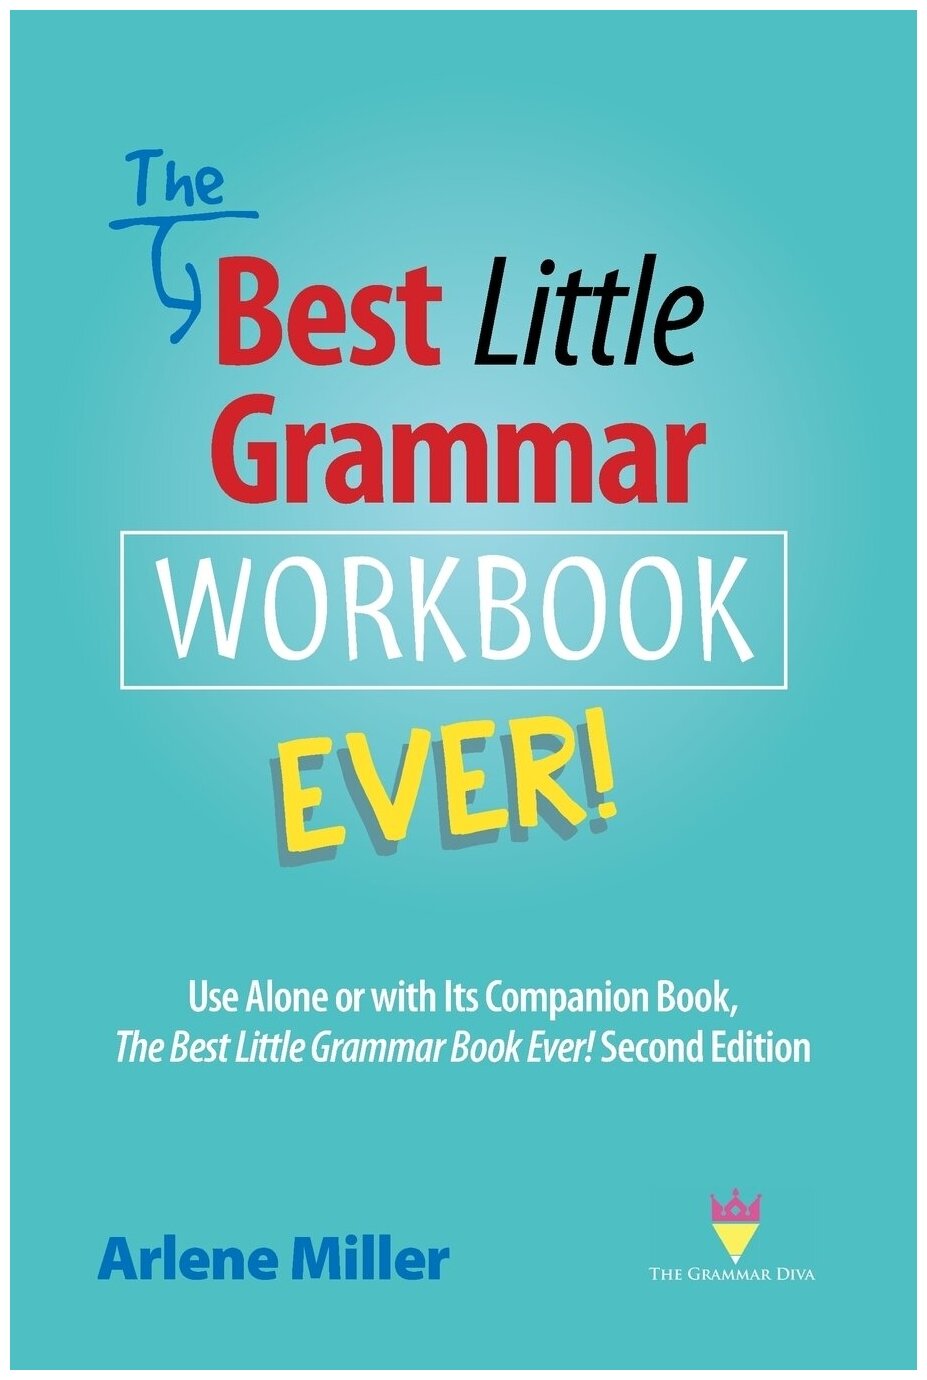 The Best Little Grammar Workbook Ever. Use Alone or with Its Companion Book The Best Little Grammar Book Ever! Second Edition